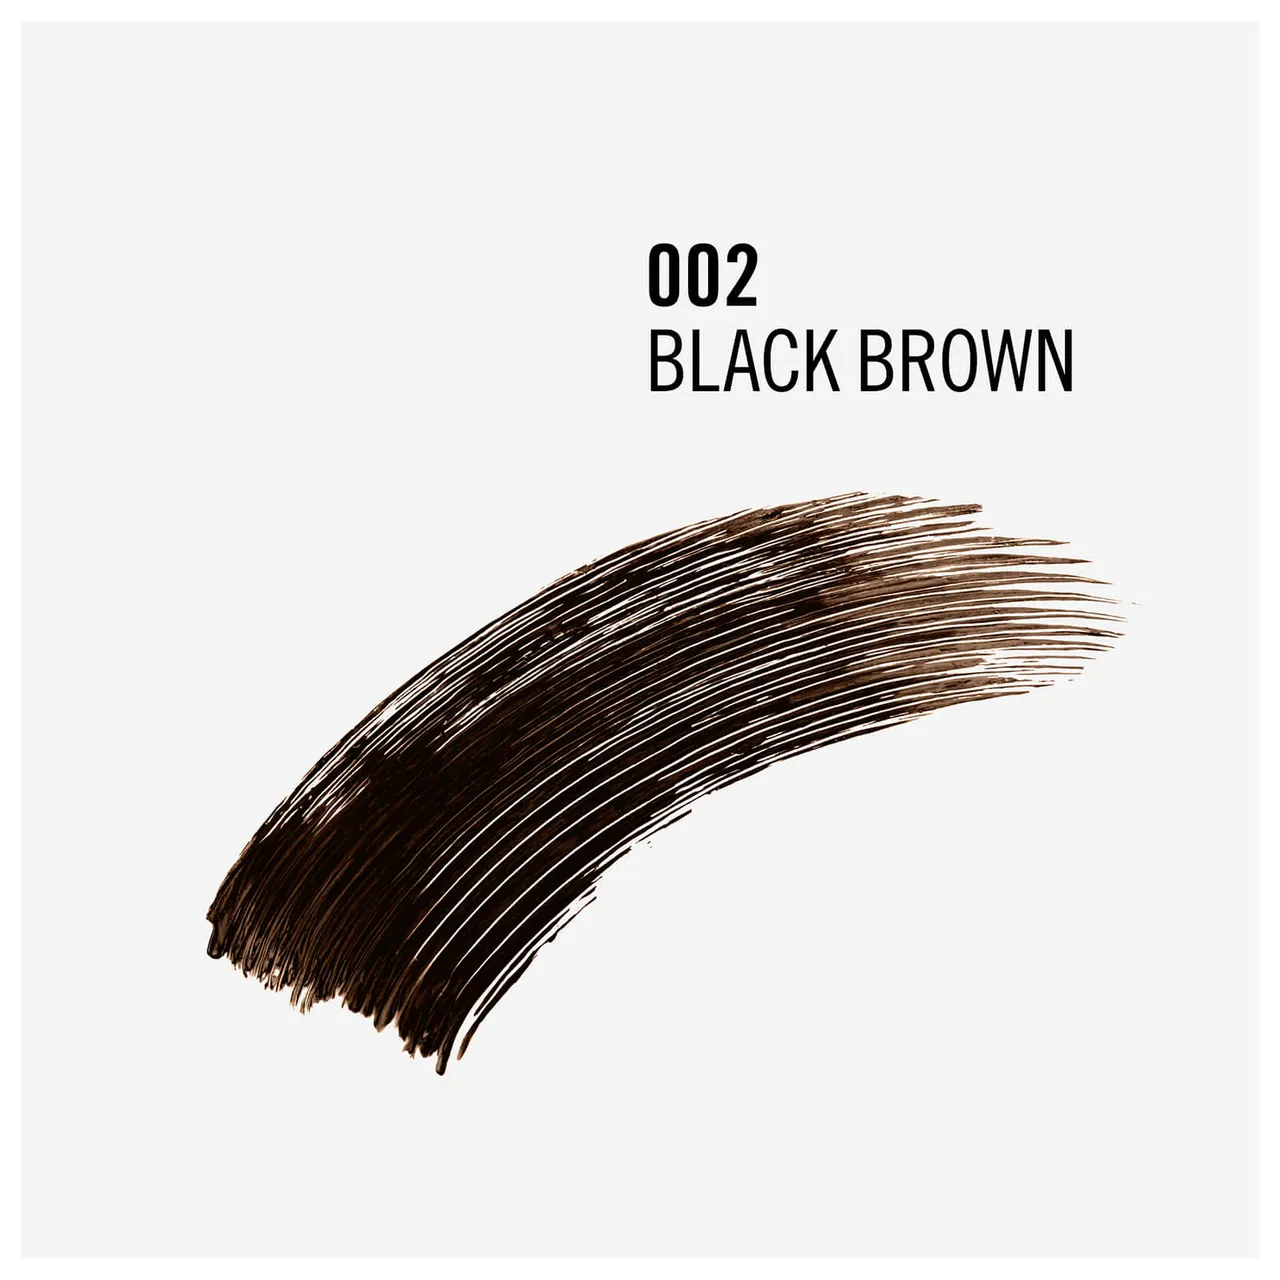 Rimmel Kind and Free Clean Mascara 7ml (Various Shades) - Brown Black